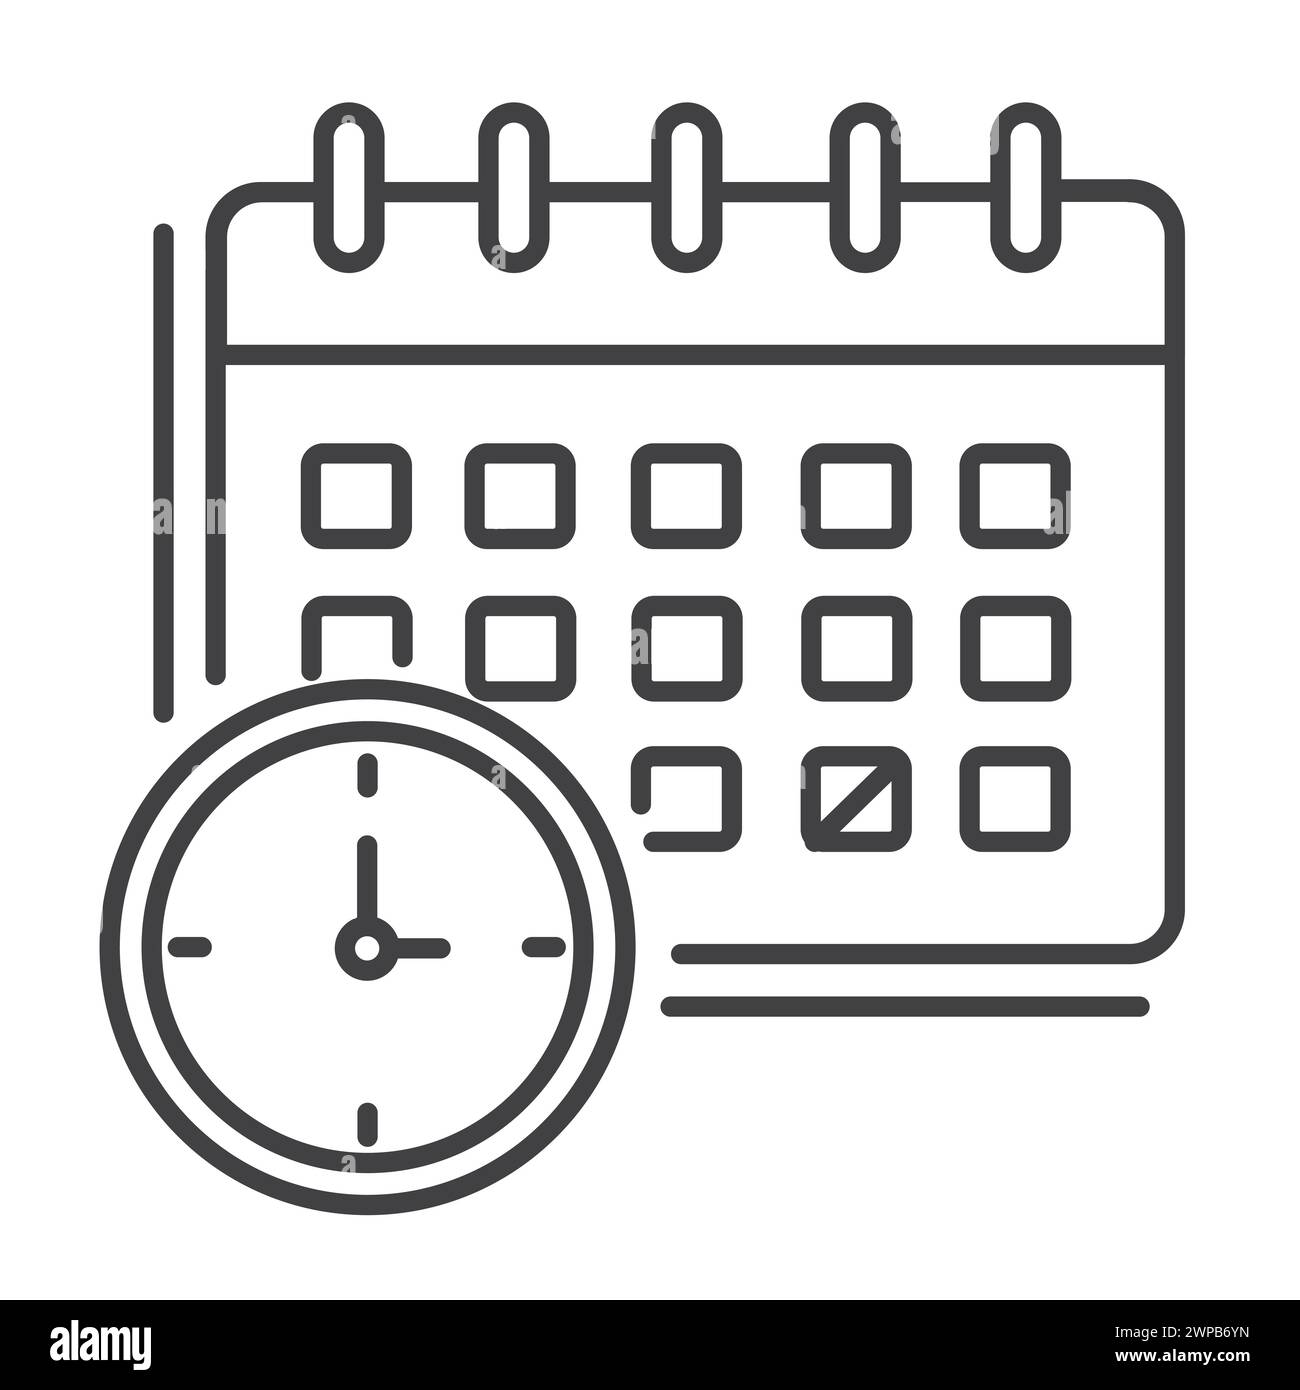 Terminplan Kalender Vektor-Illustration Symboldesign Stock Vektor